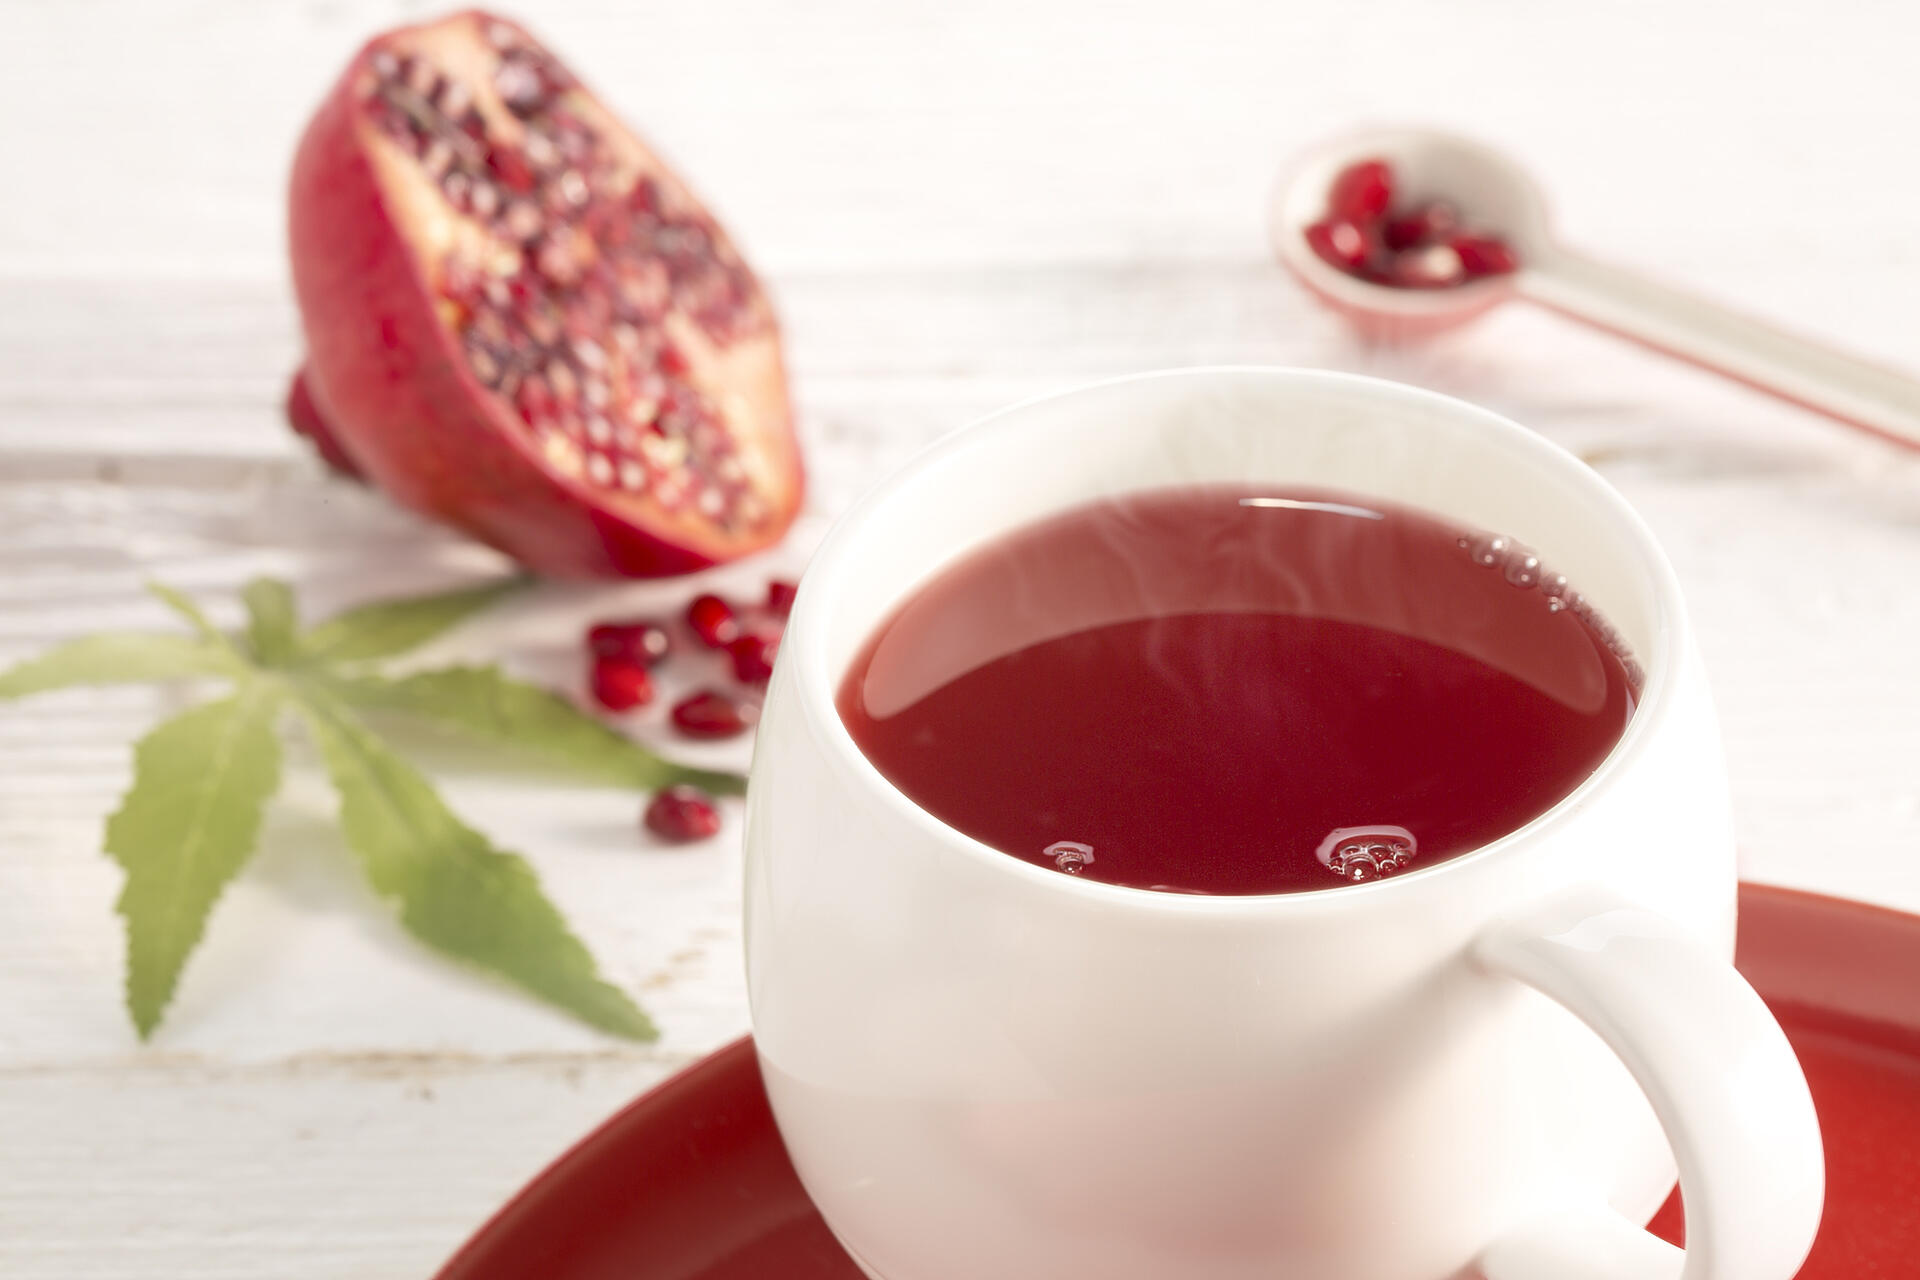 Berry Treat Organic Tea*